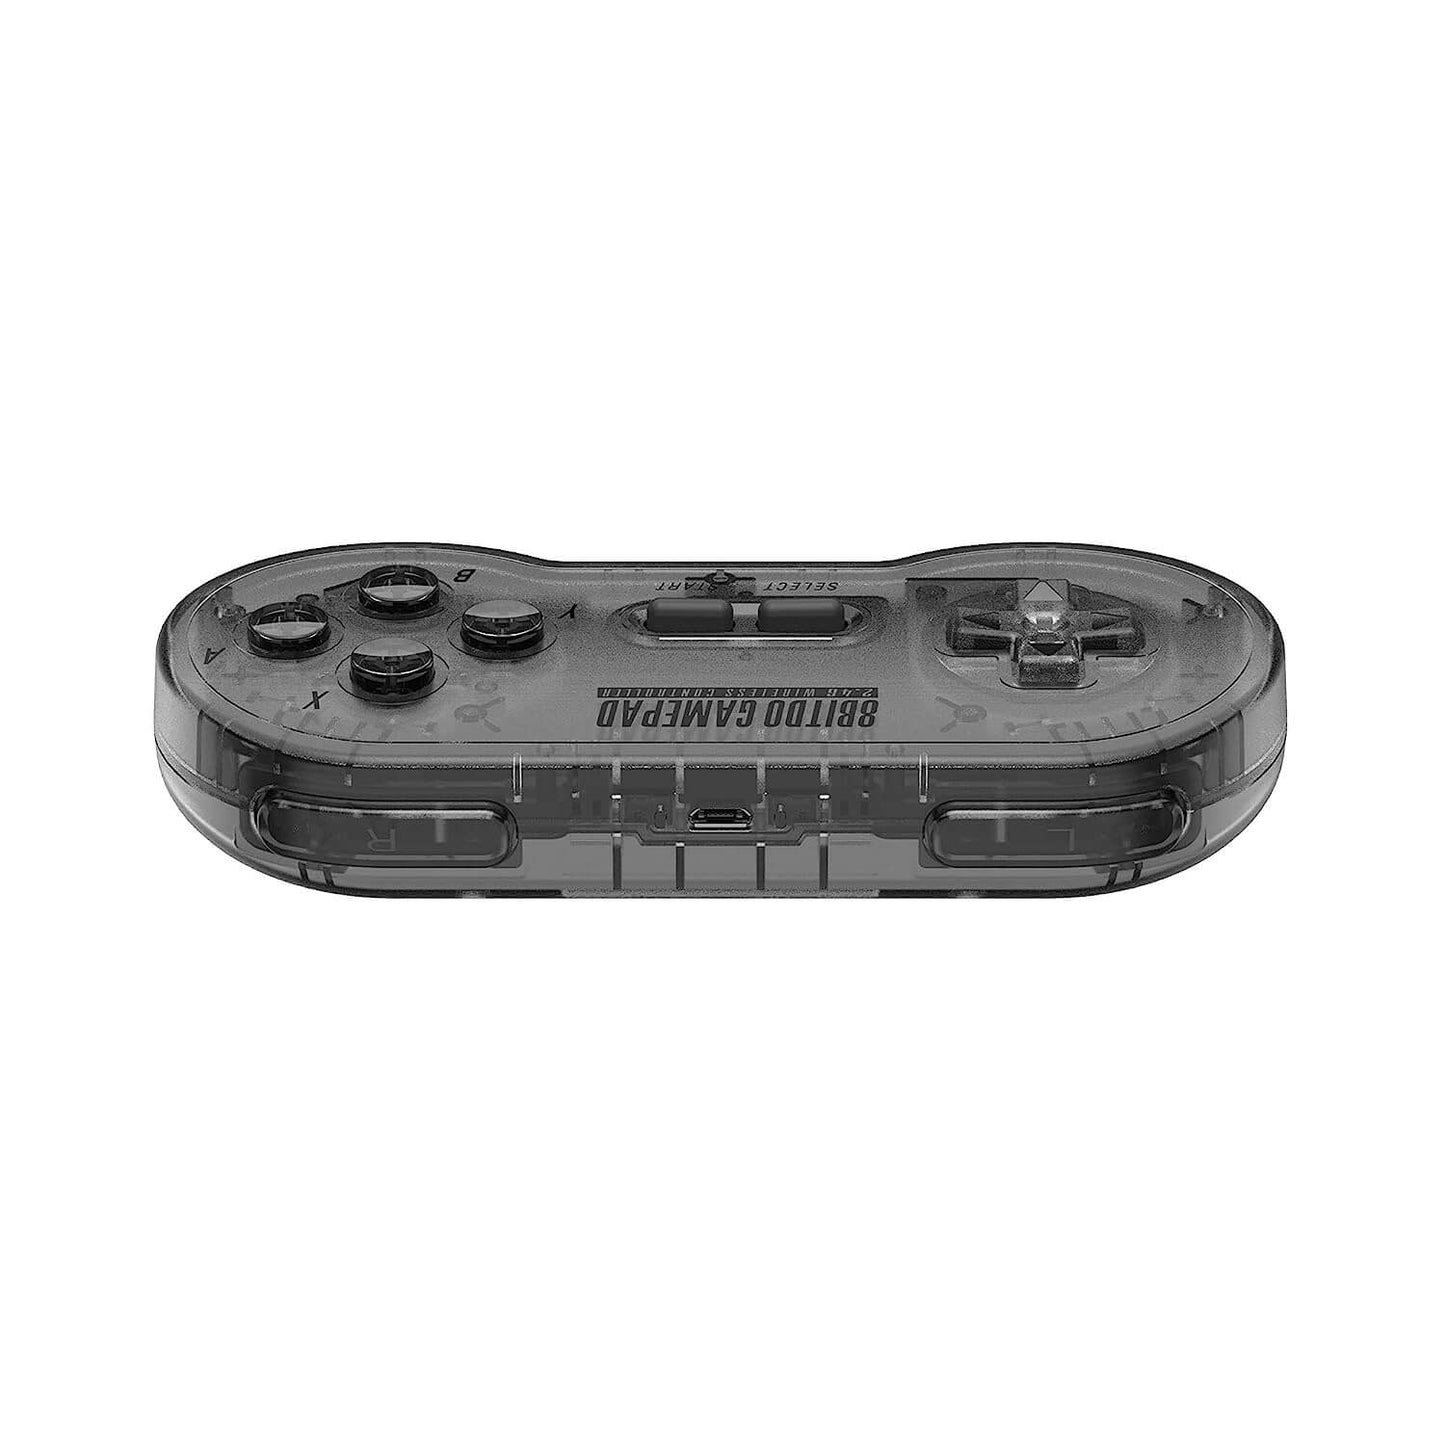 8bitdo SN30 Wireless Controller for Super Nintendo and Super Famicom - Clear Black Edition